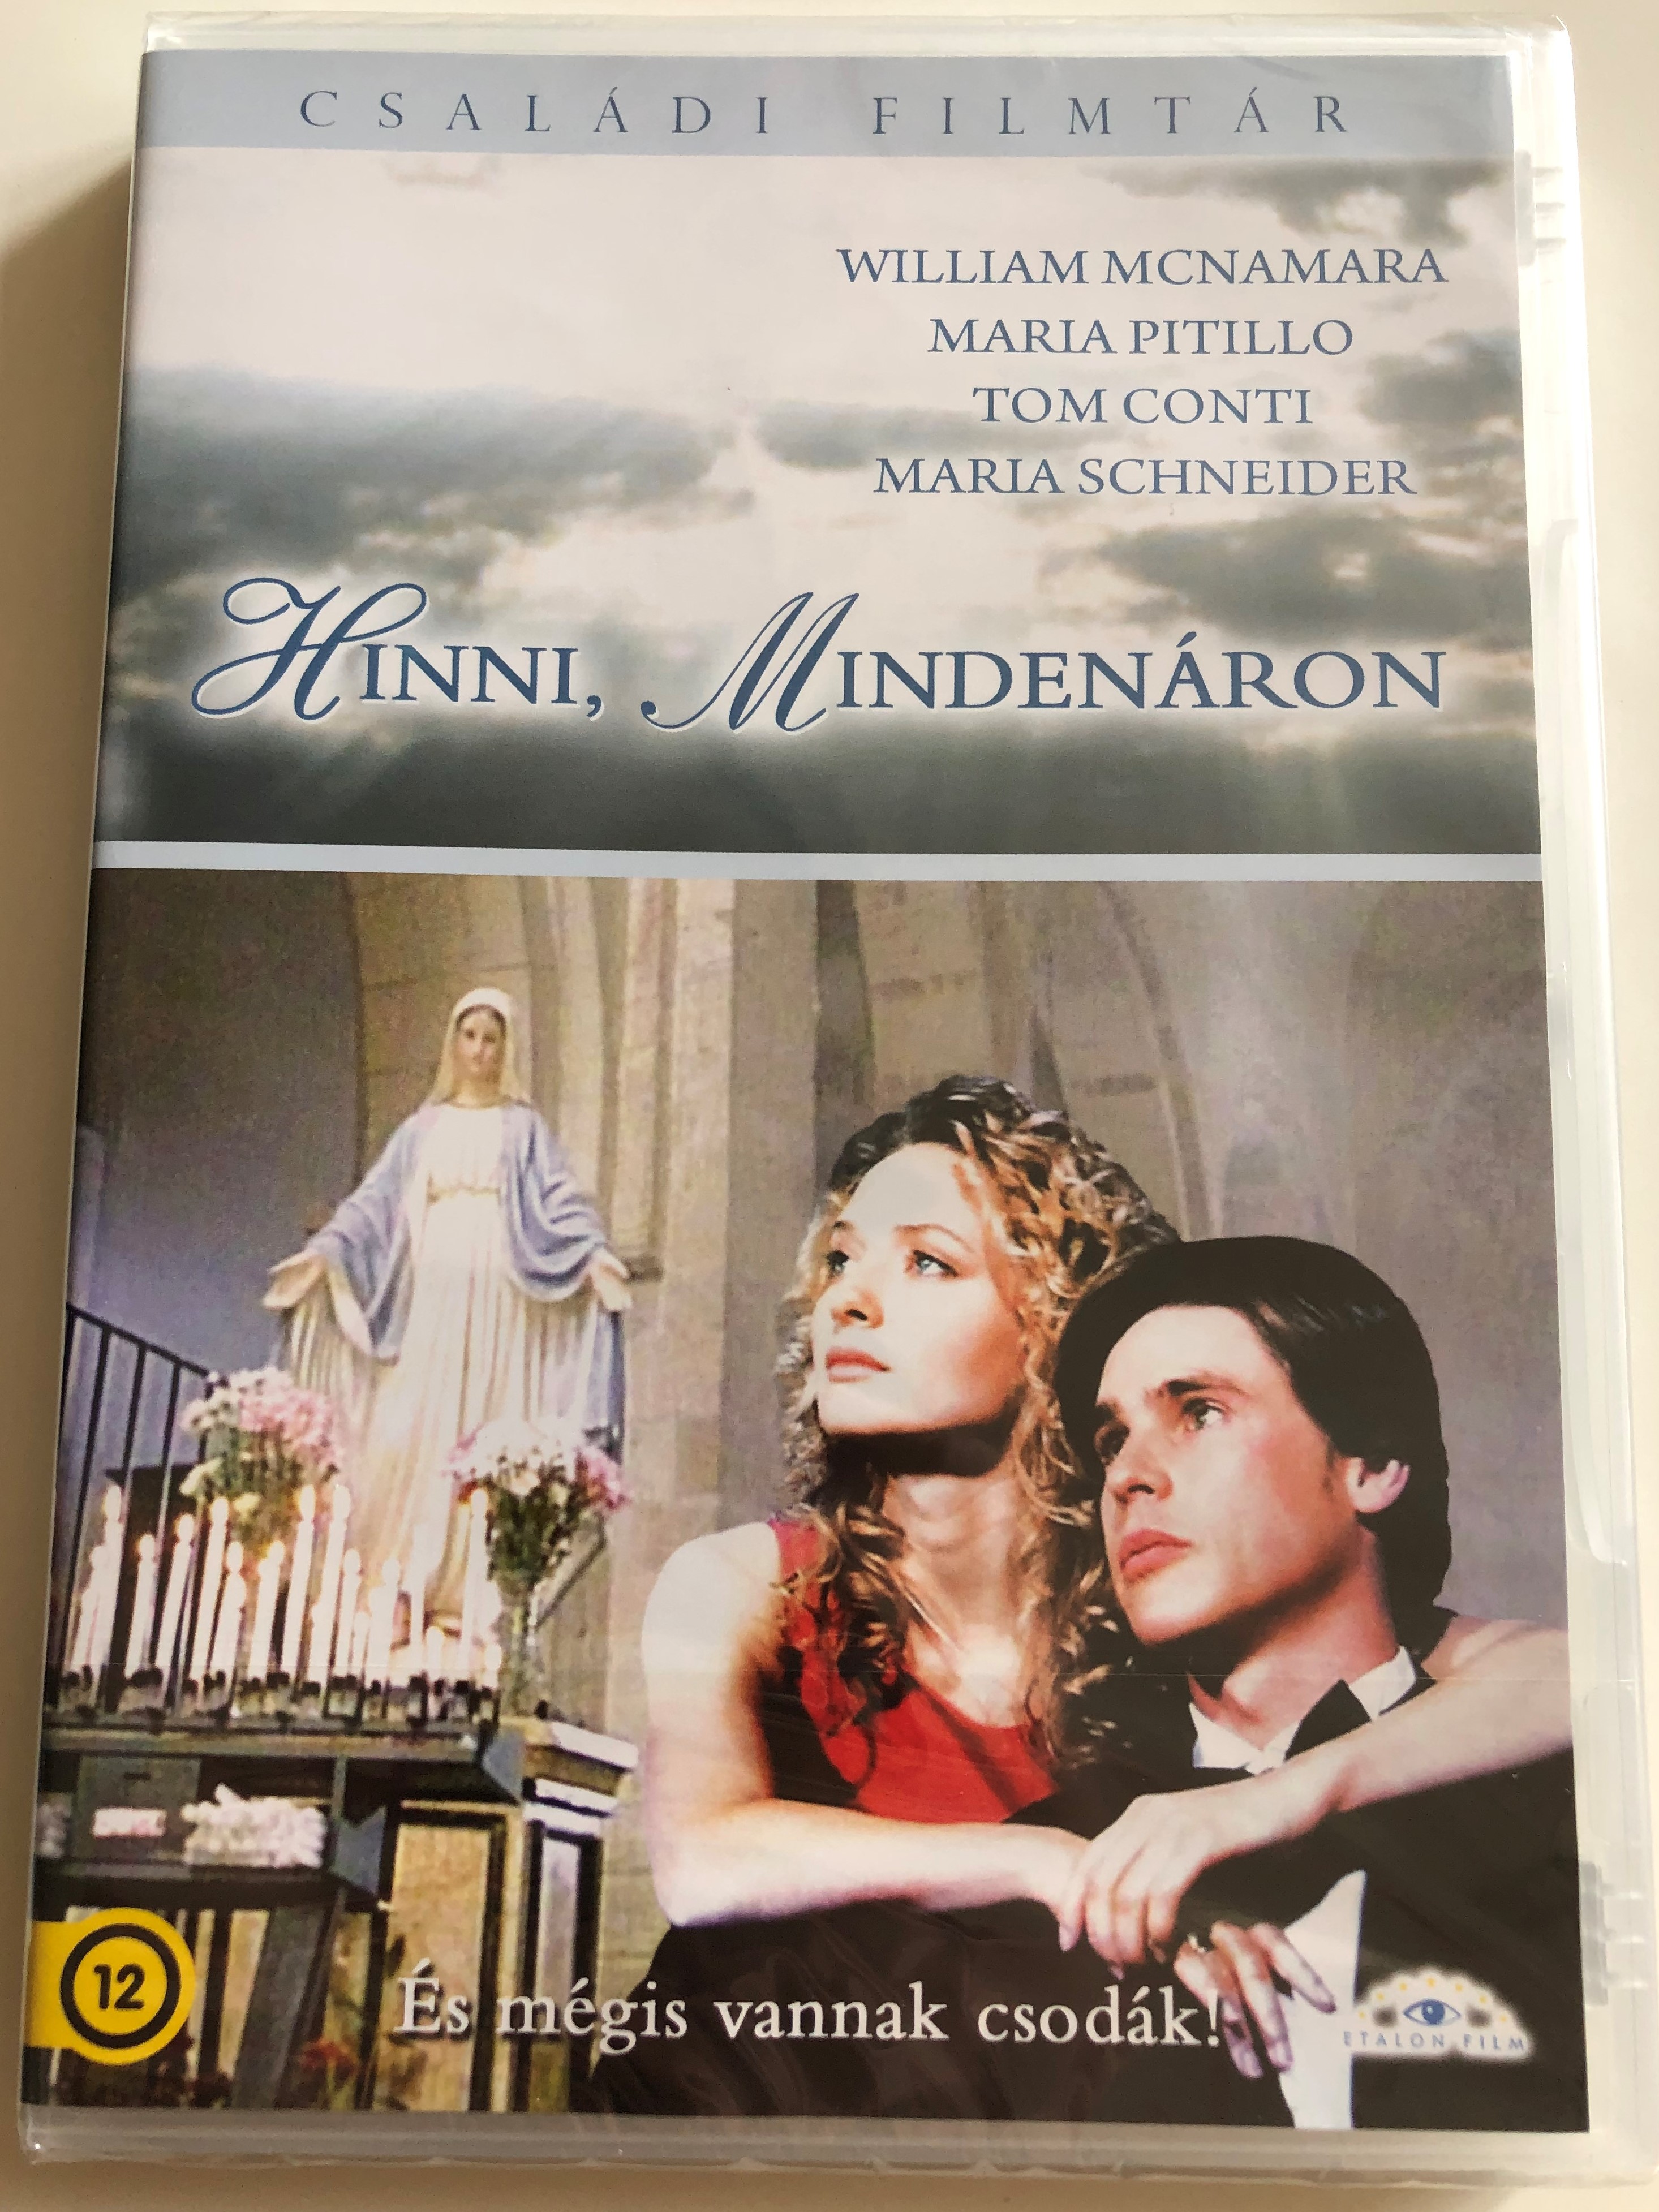 something-to-believe-in-dvd-1998-hinni-minden-ron-directed-by-john-hough-starring-william-mcnamara-maria-pitillo-tom-conti-maria-schneider-1-.jpg